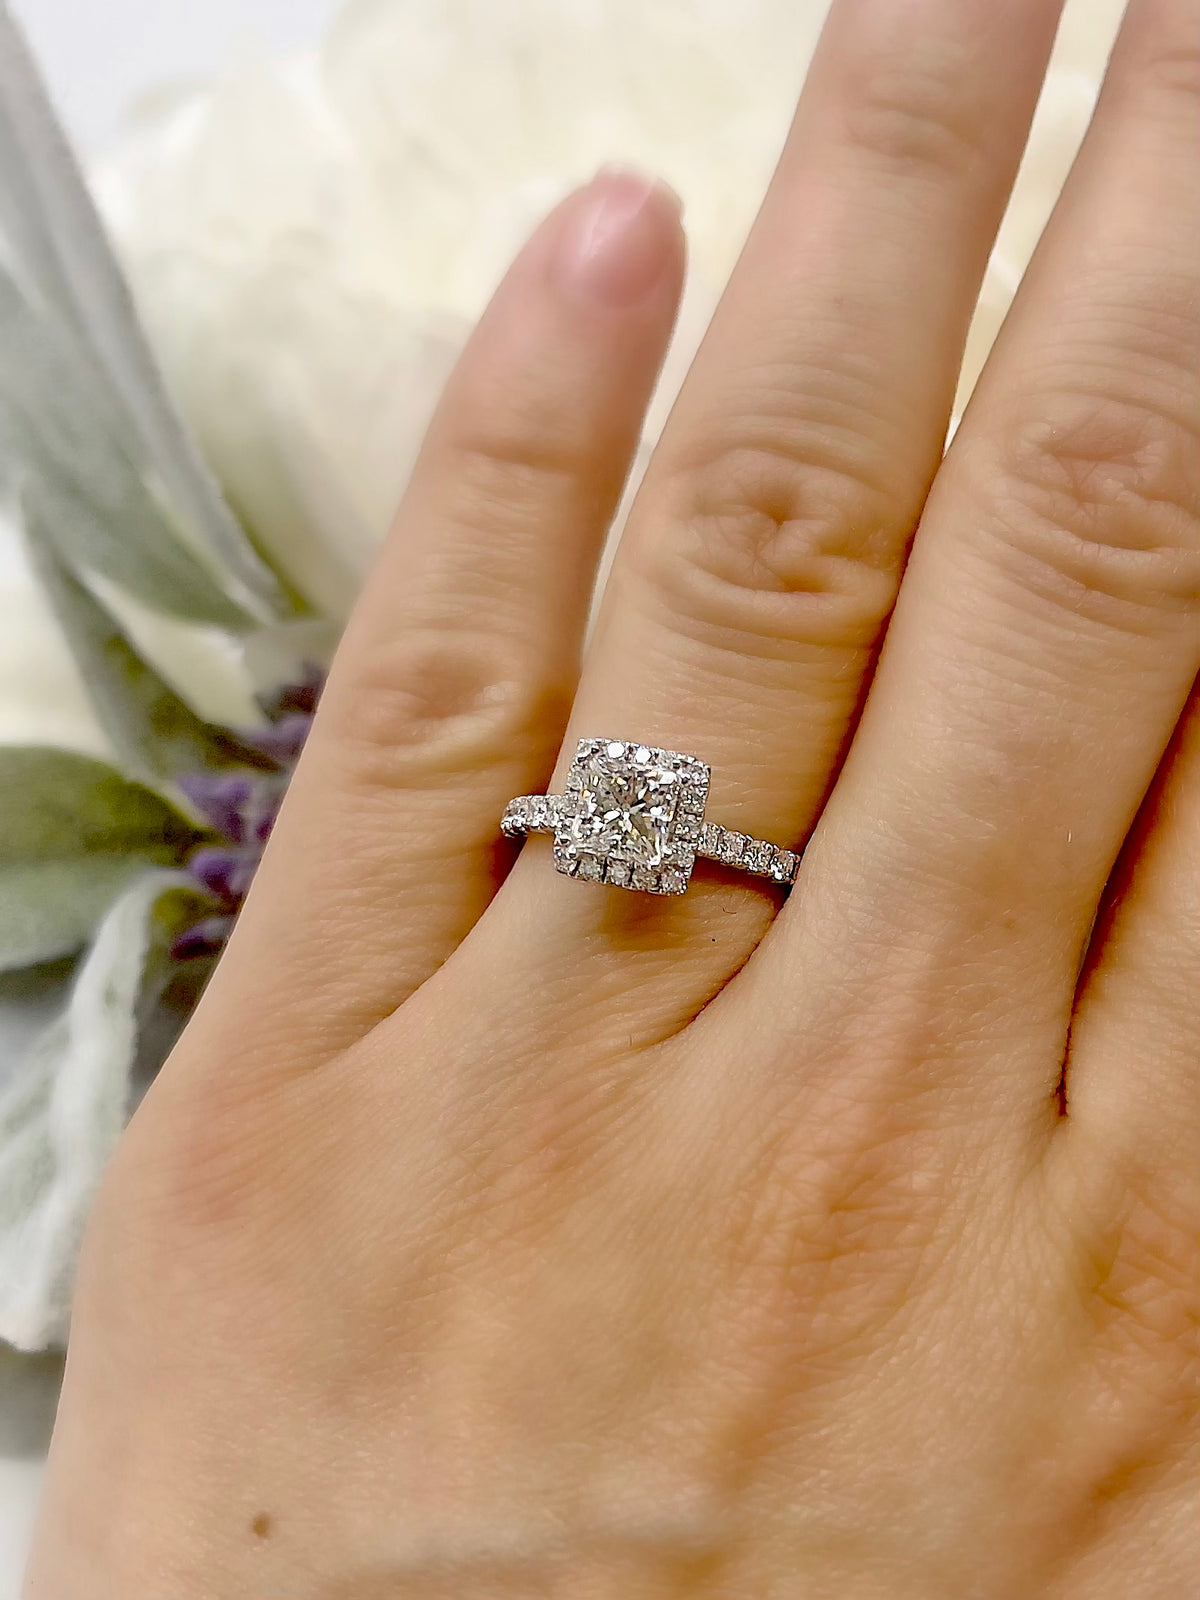 18K White Gold 1.31cttw Diamond Princess Cut Halo Engagement Ring, size 6.5